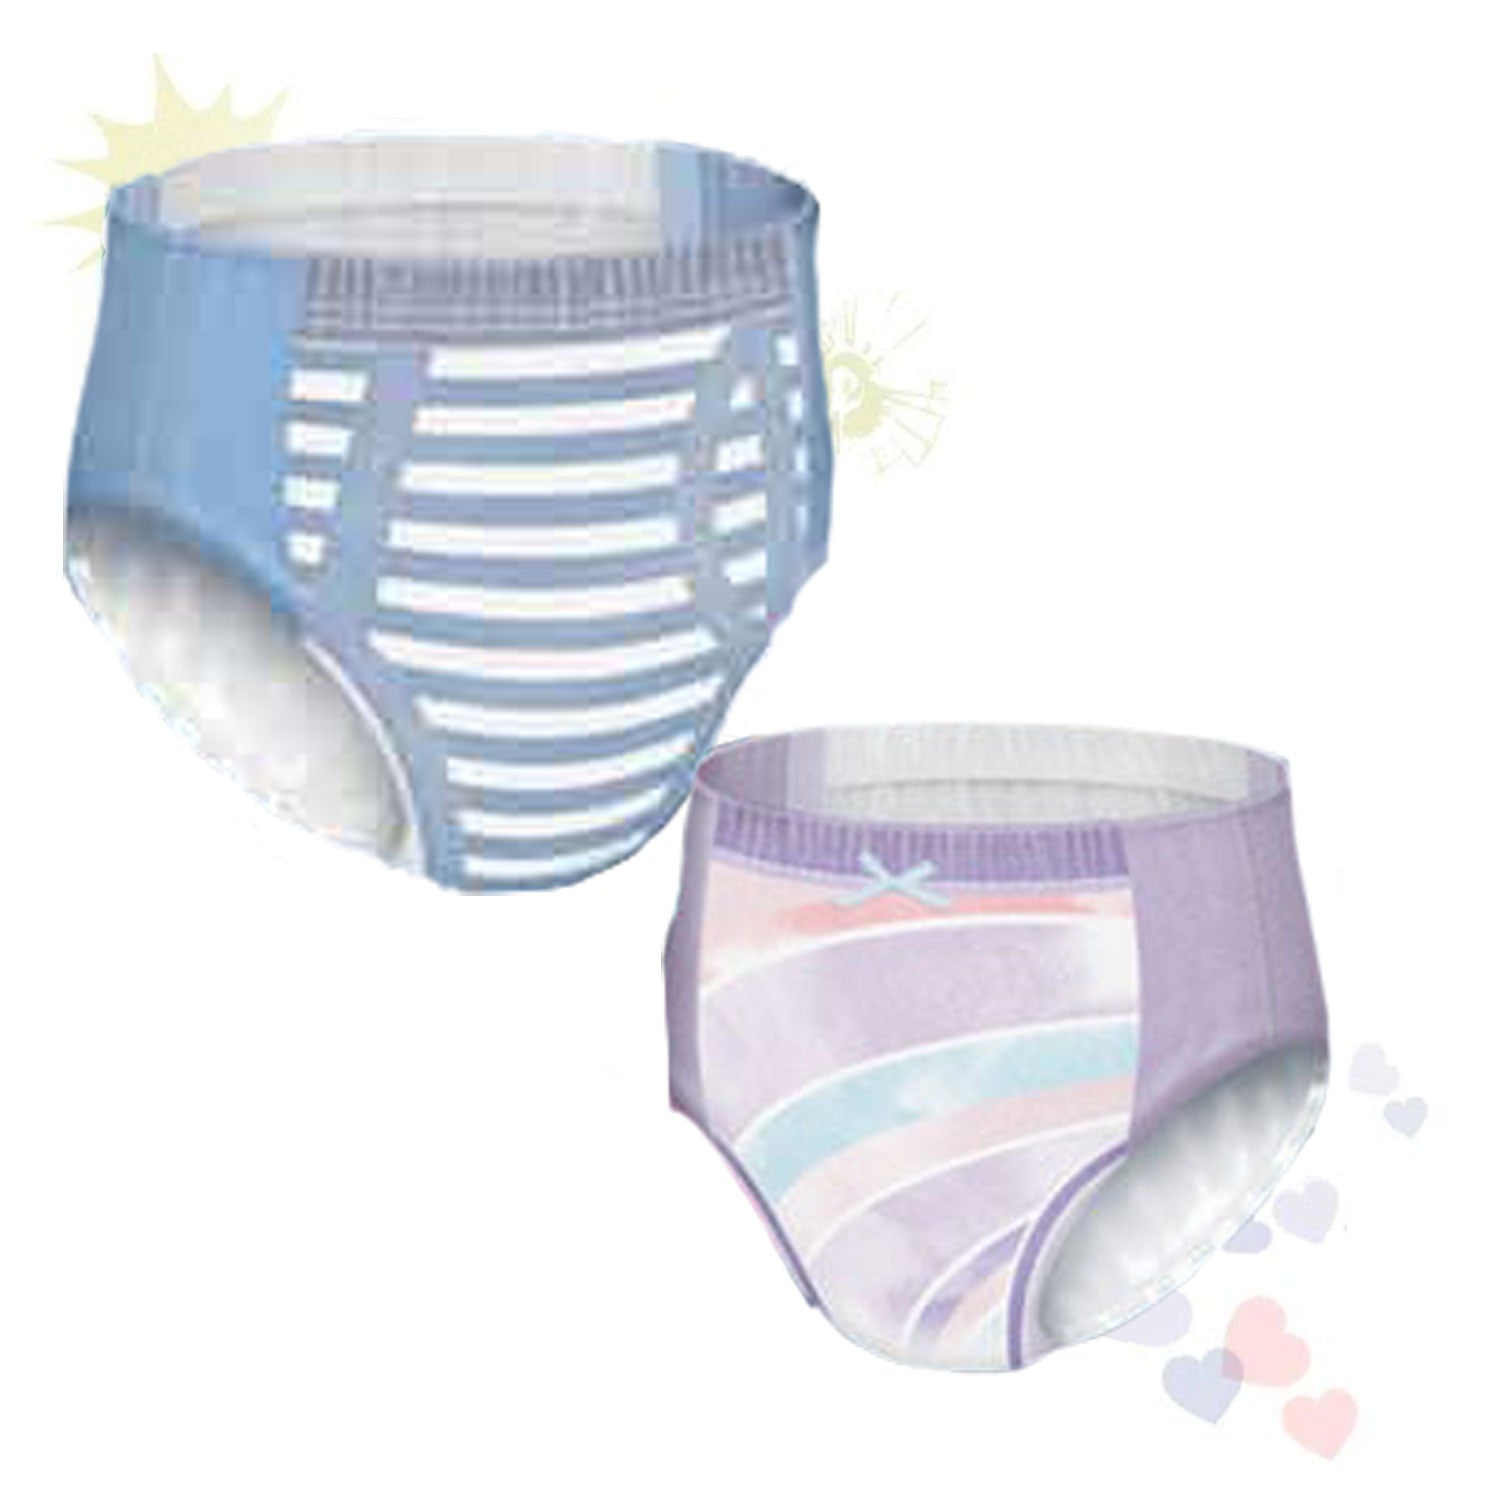 GoodNites Small or Medium Nighttime Underwear for Girls